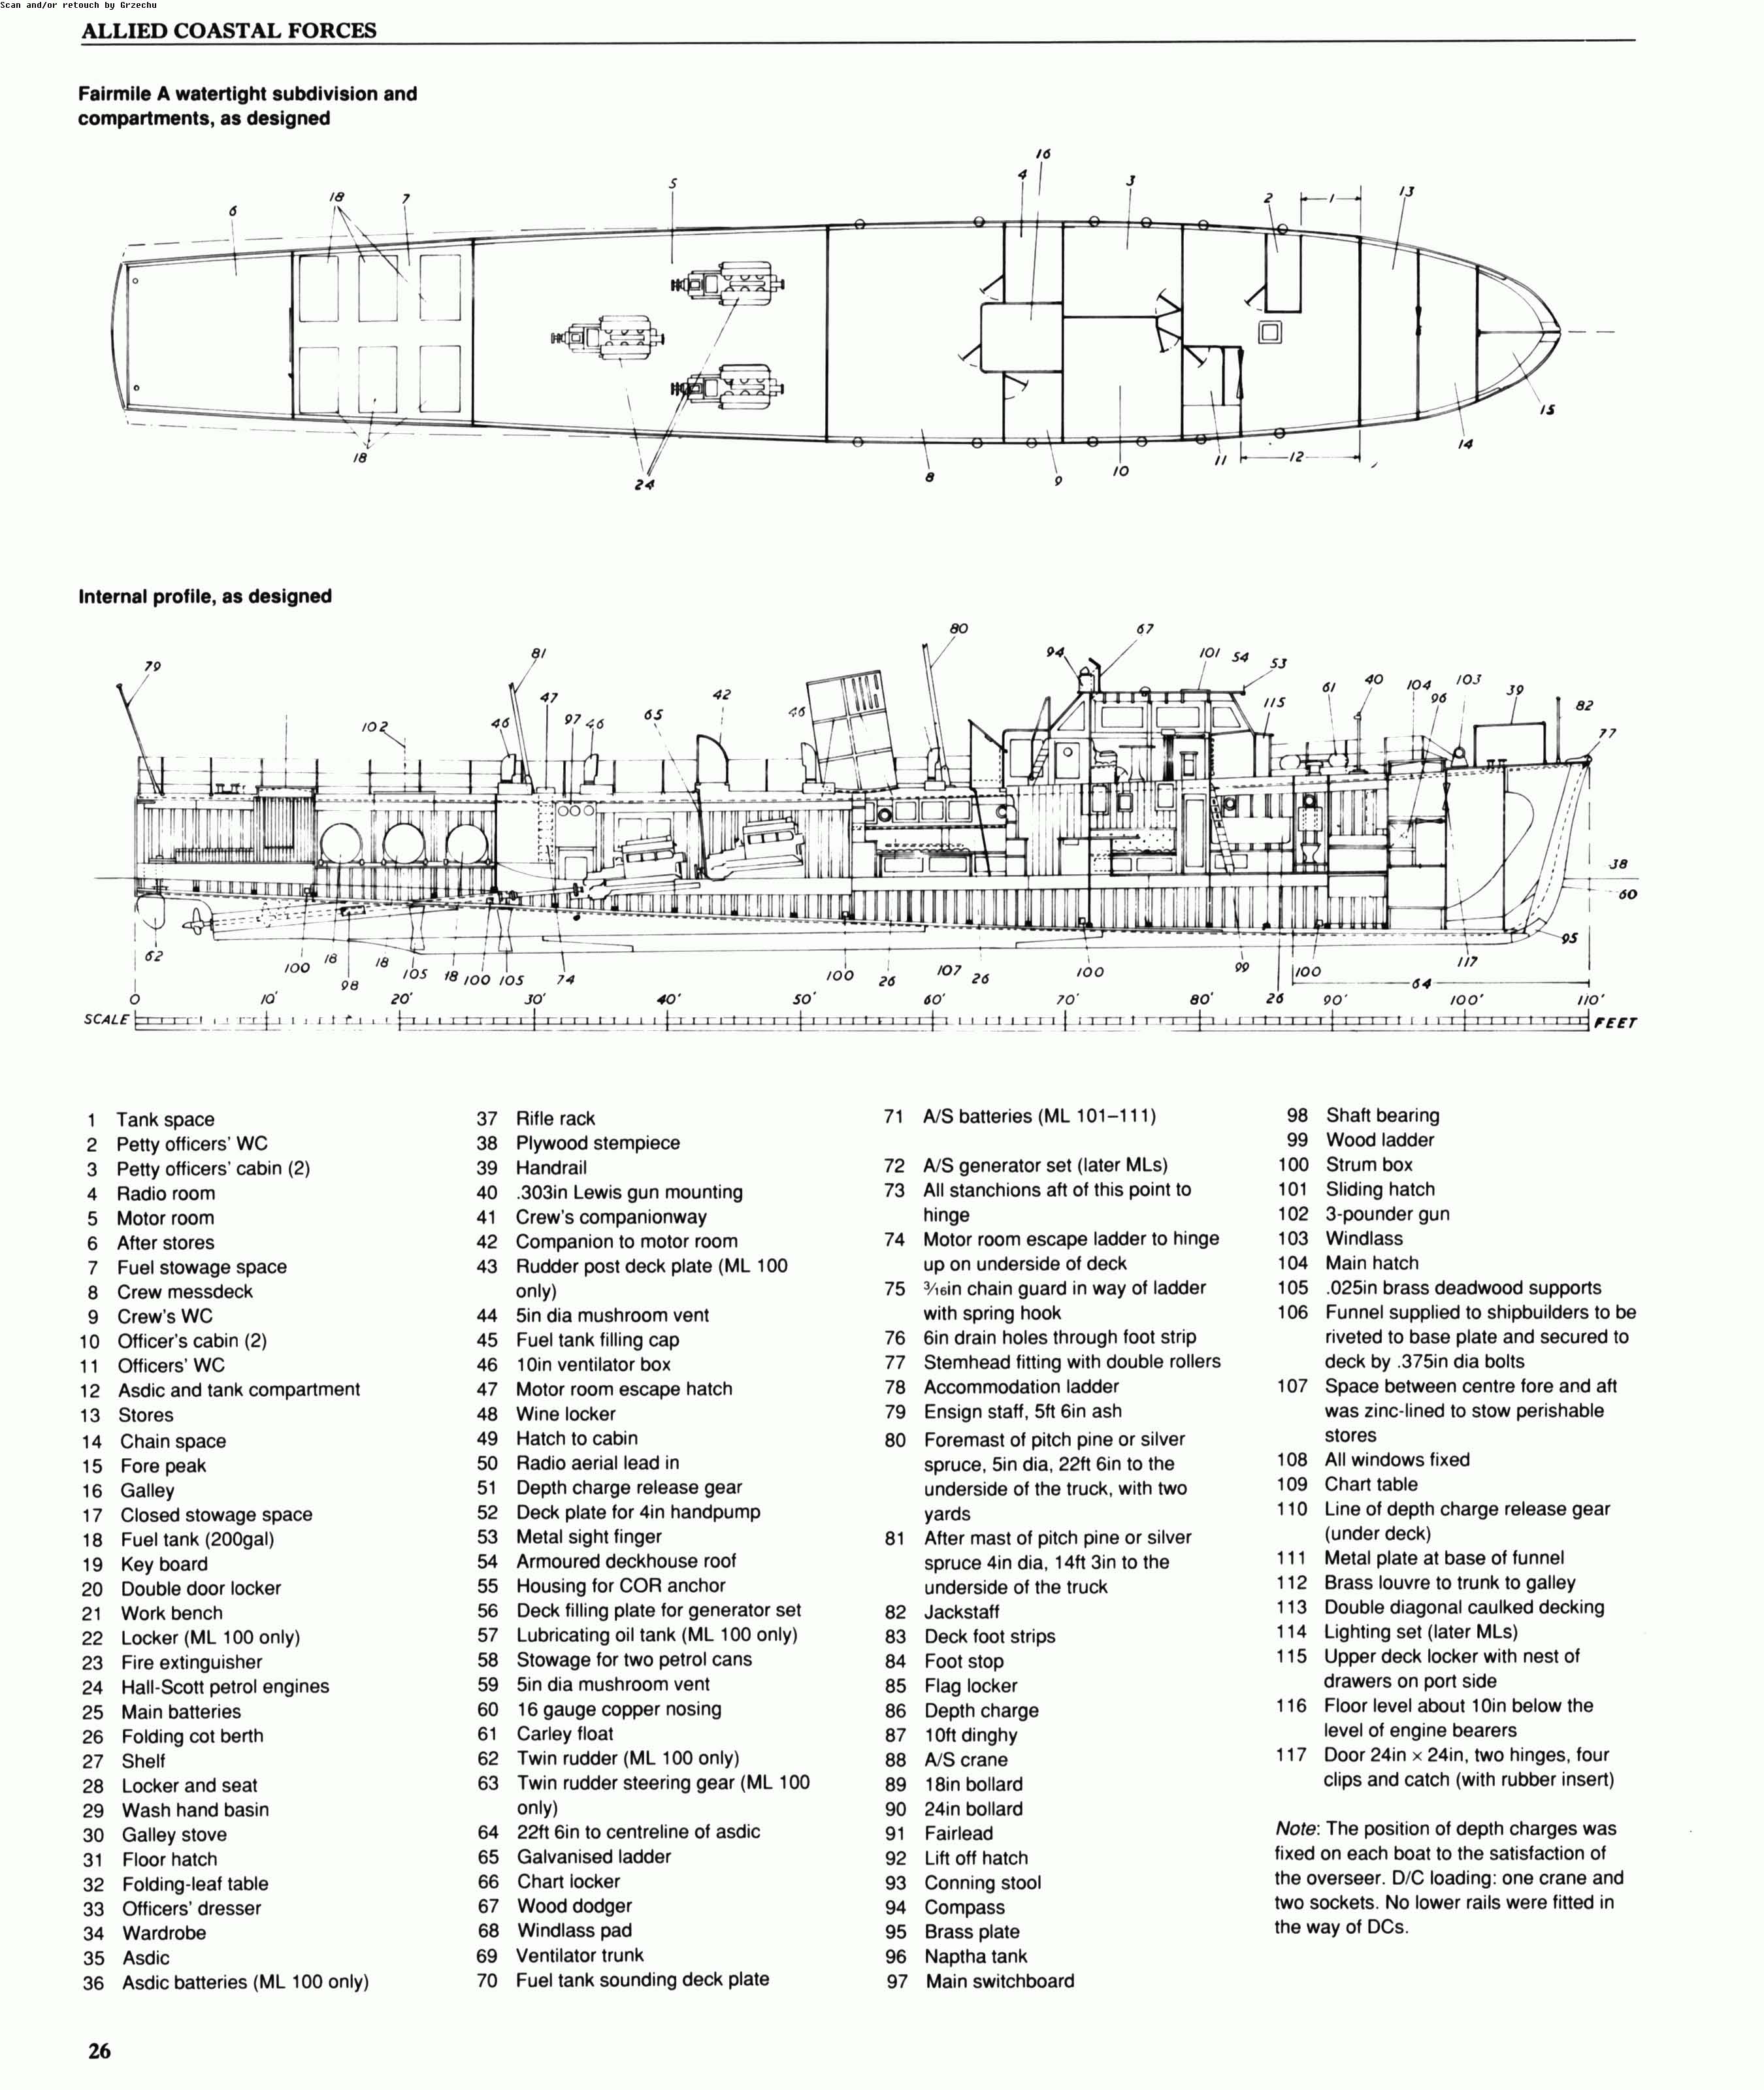 Allied Coastal Forces of World War II (1) Fairmile designs & U.S. submarine chasers_Page_028.jpg